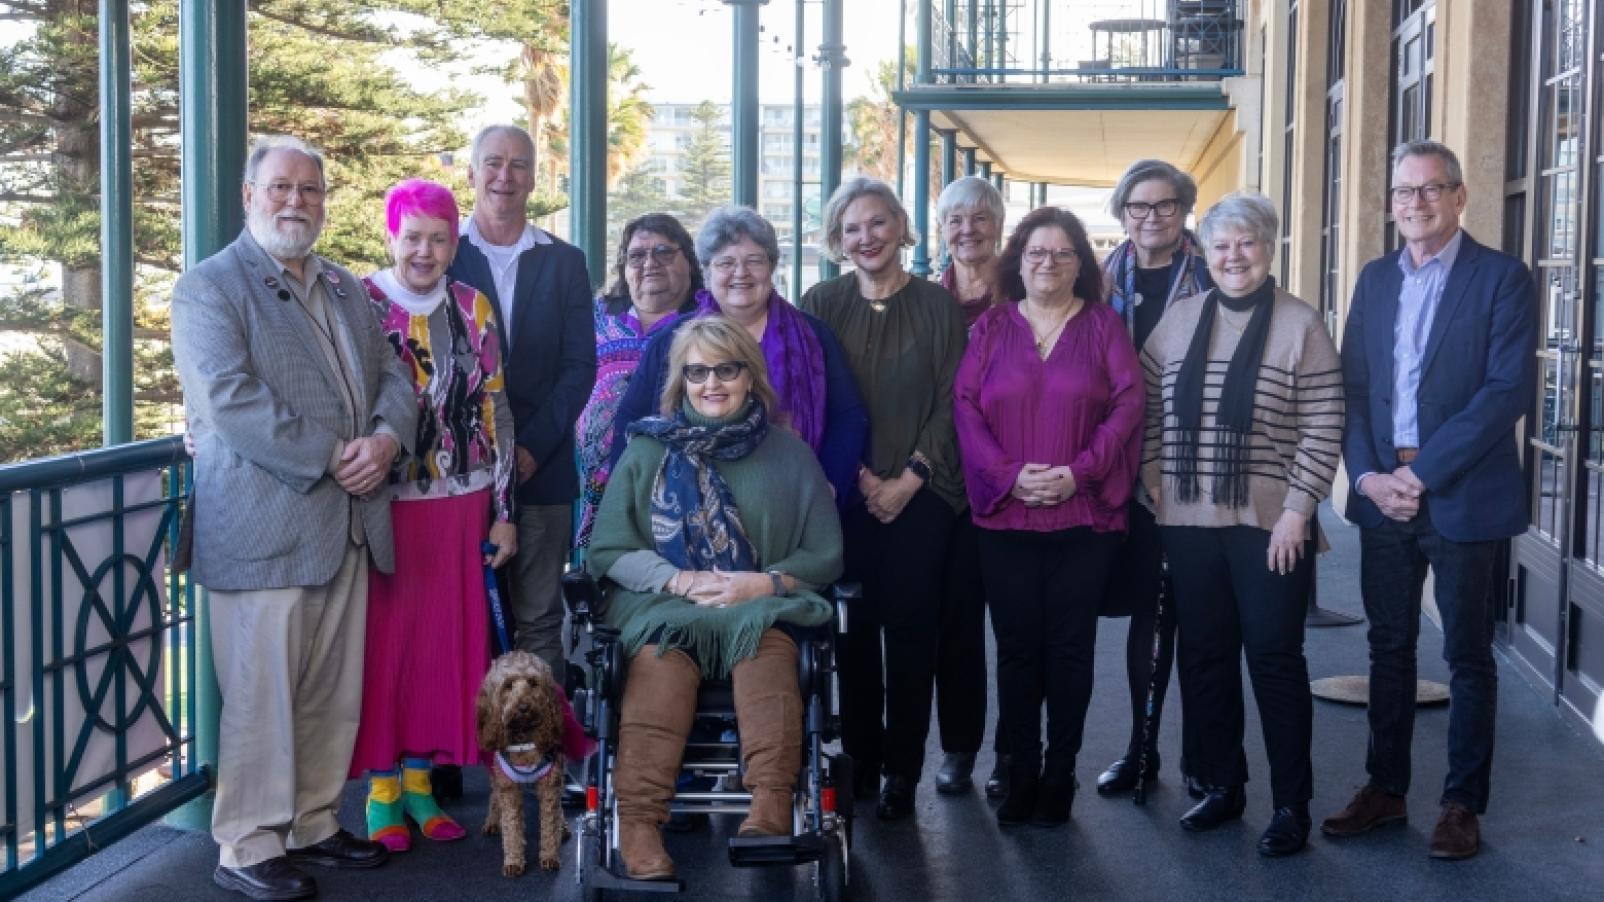 The Dementia Australia Advisory Committee group photo on a balcony